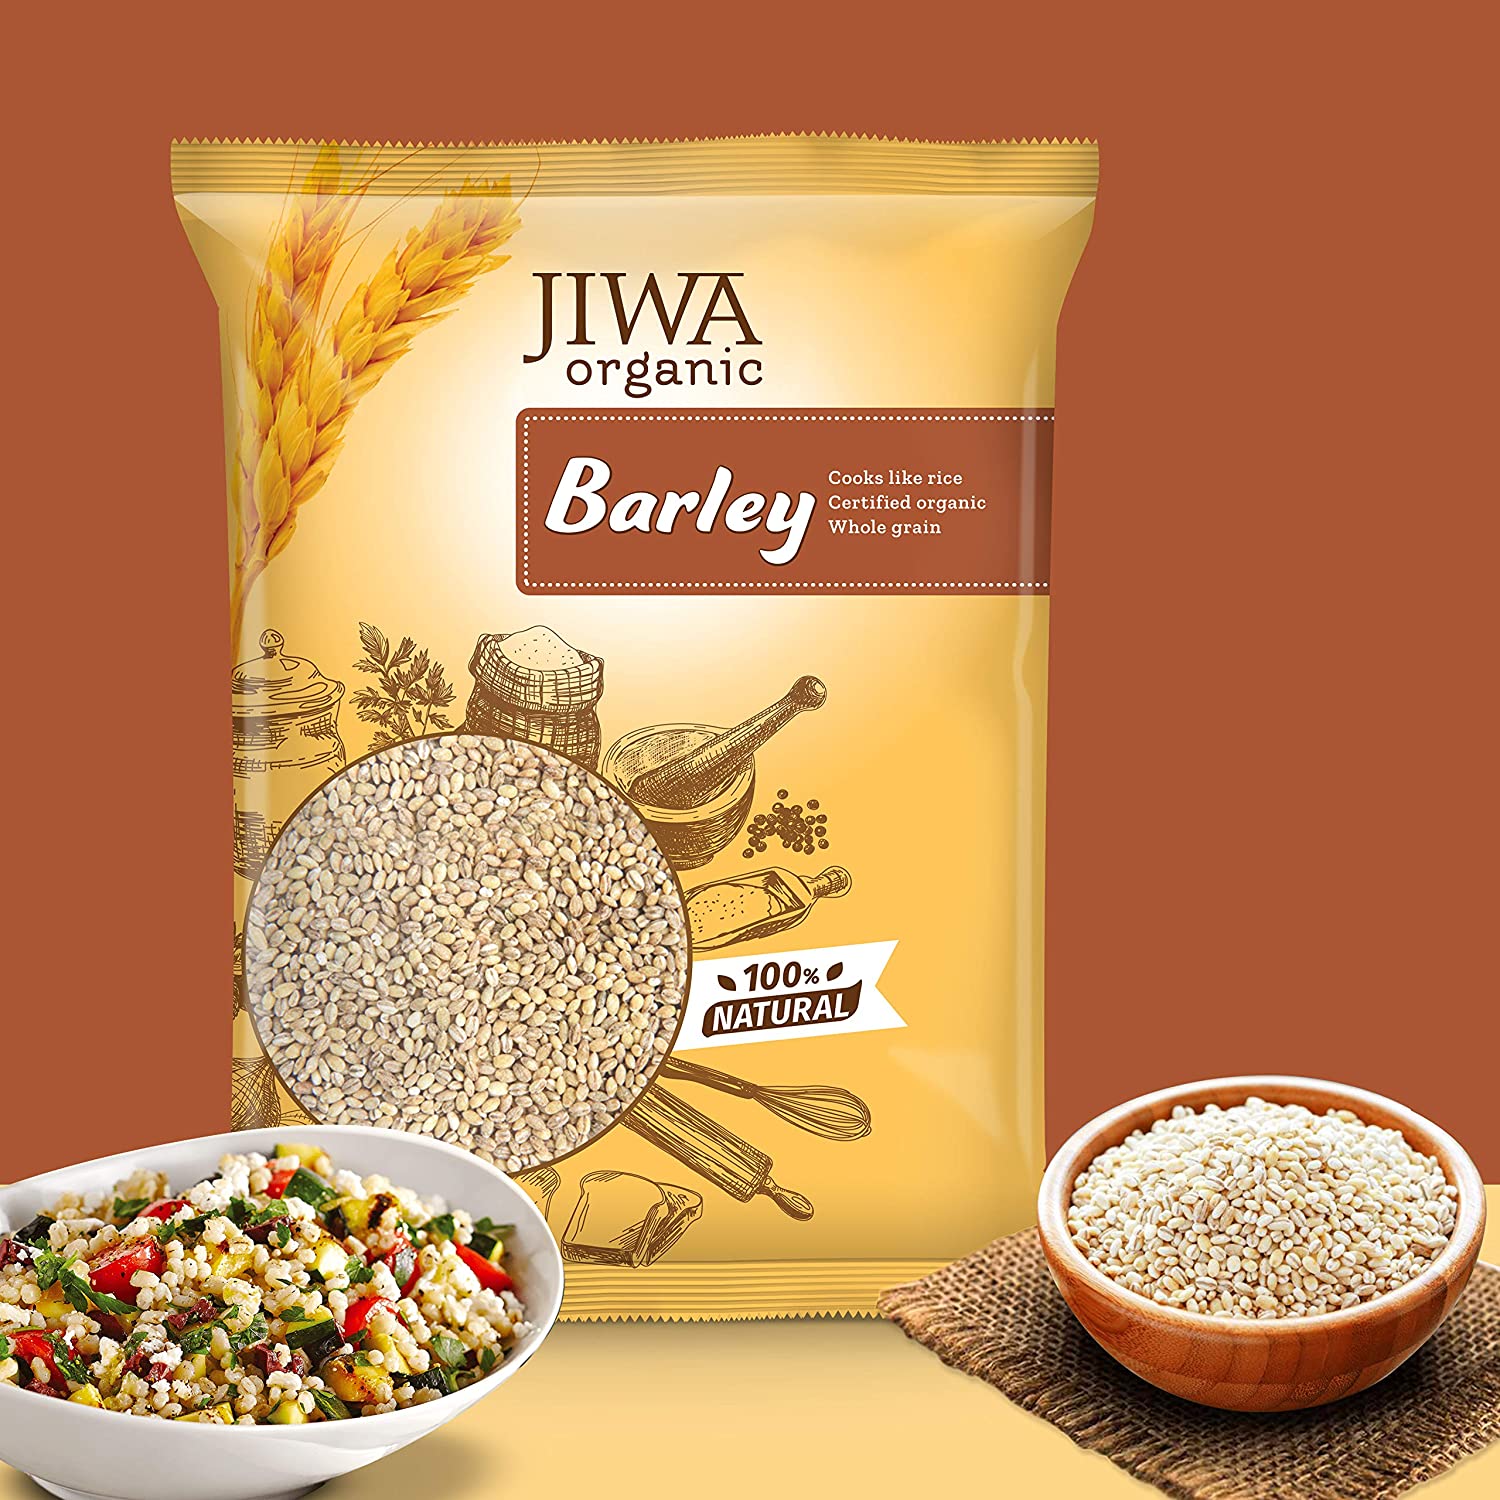 Jiwa Organic Pearl Barley Flour Image